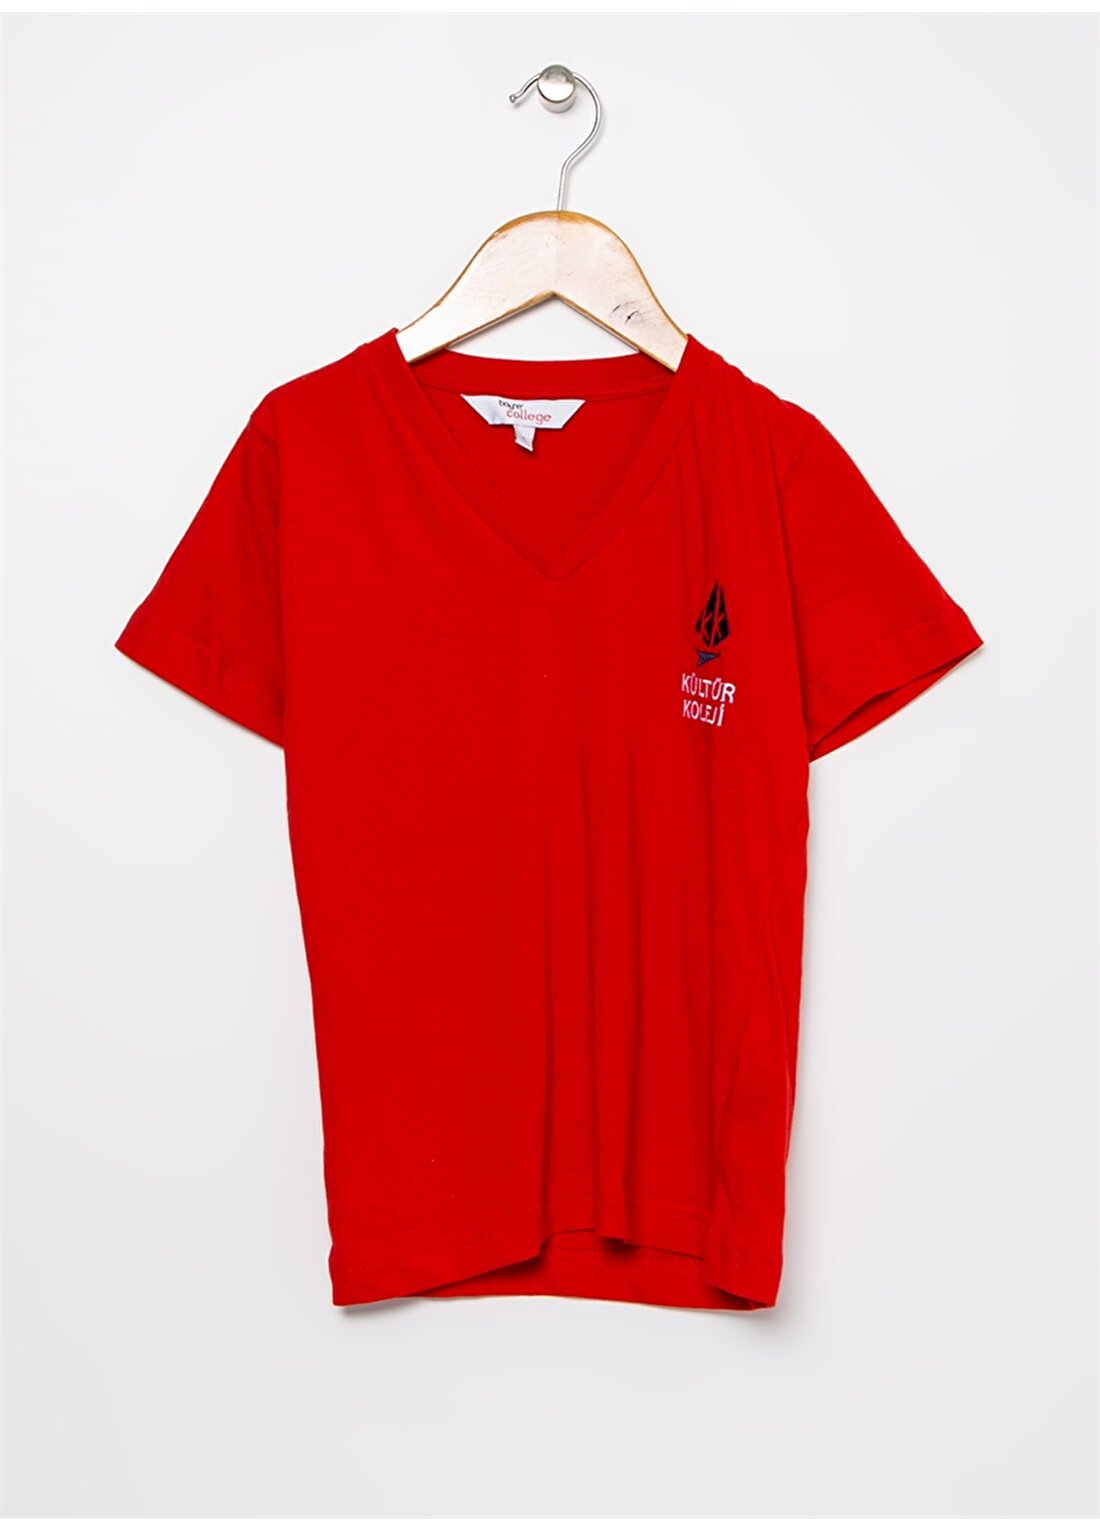 Kültür Koleji V Yaka Kısa Kollu Logolu Kırmızı Erkek T-Shirt